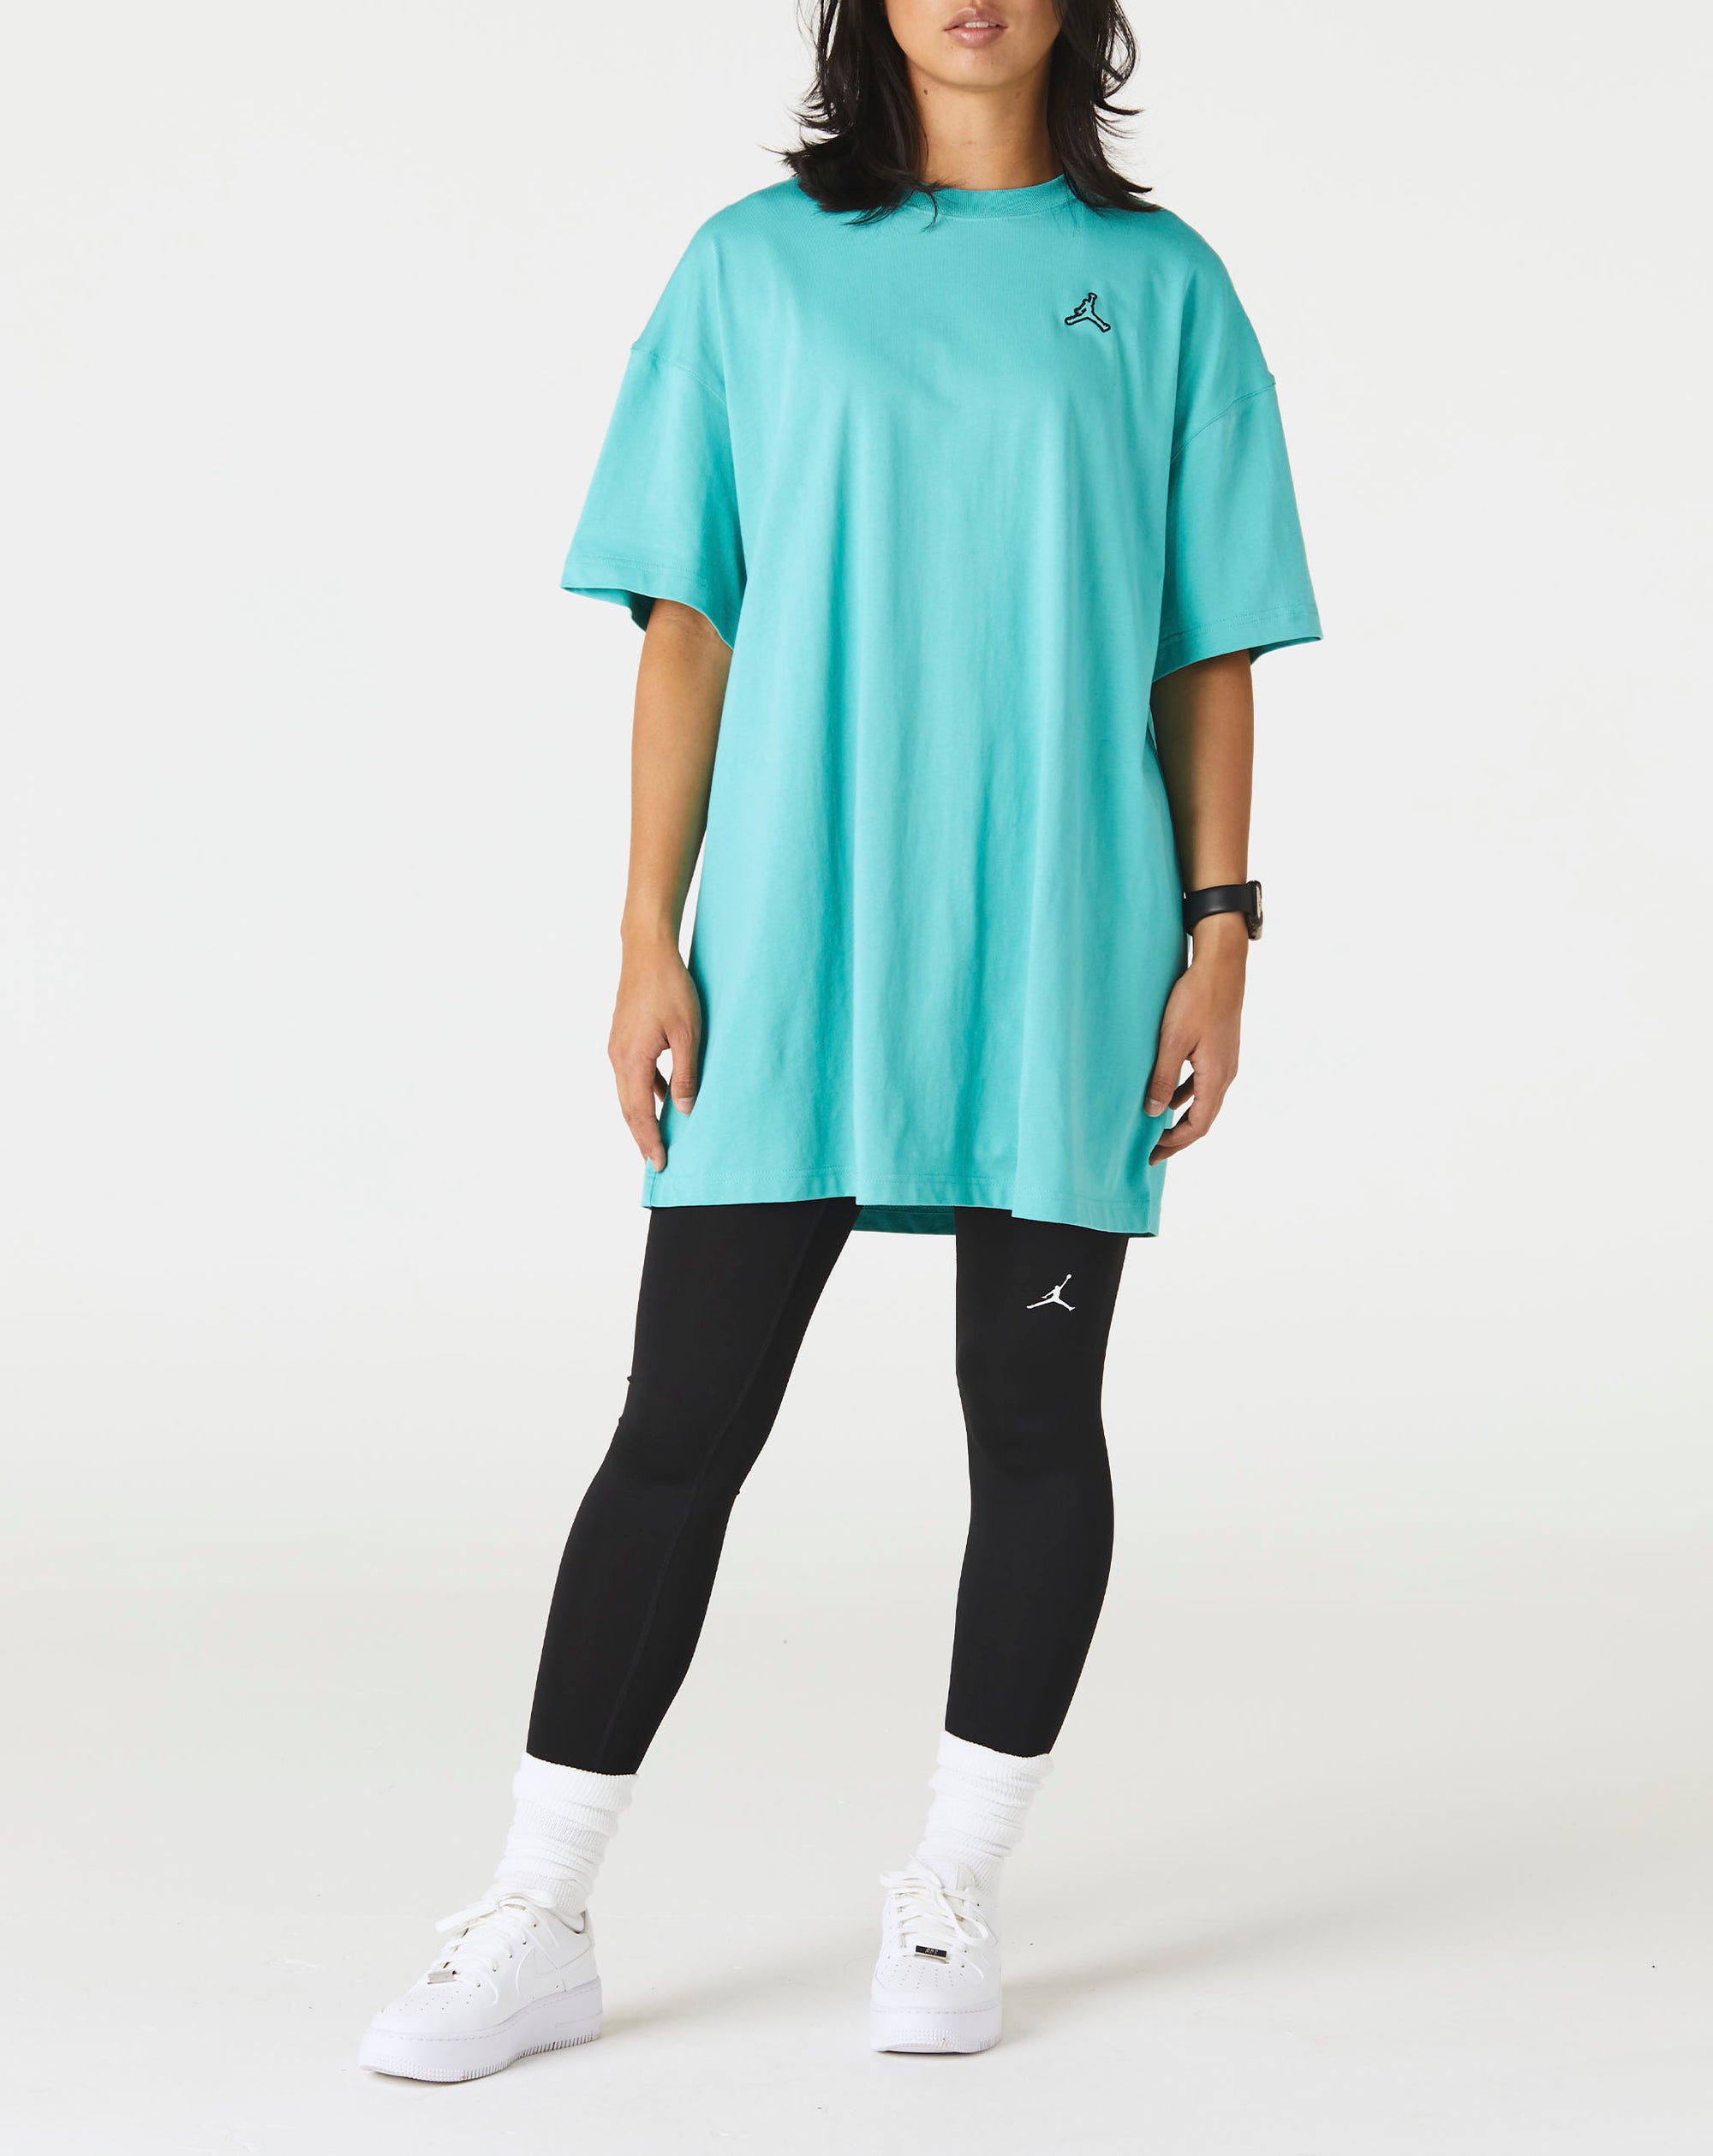 Air Jordan Women's Jordan Essentials T-Shirt Dress - Rule of Next Apparel